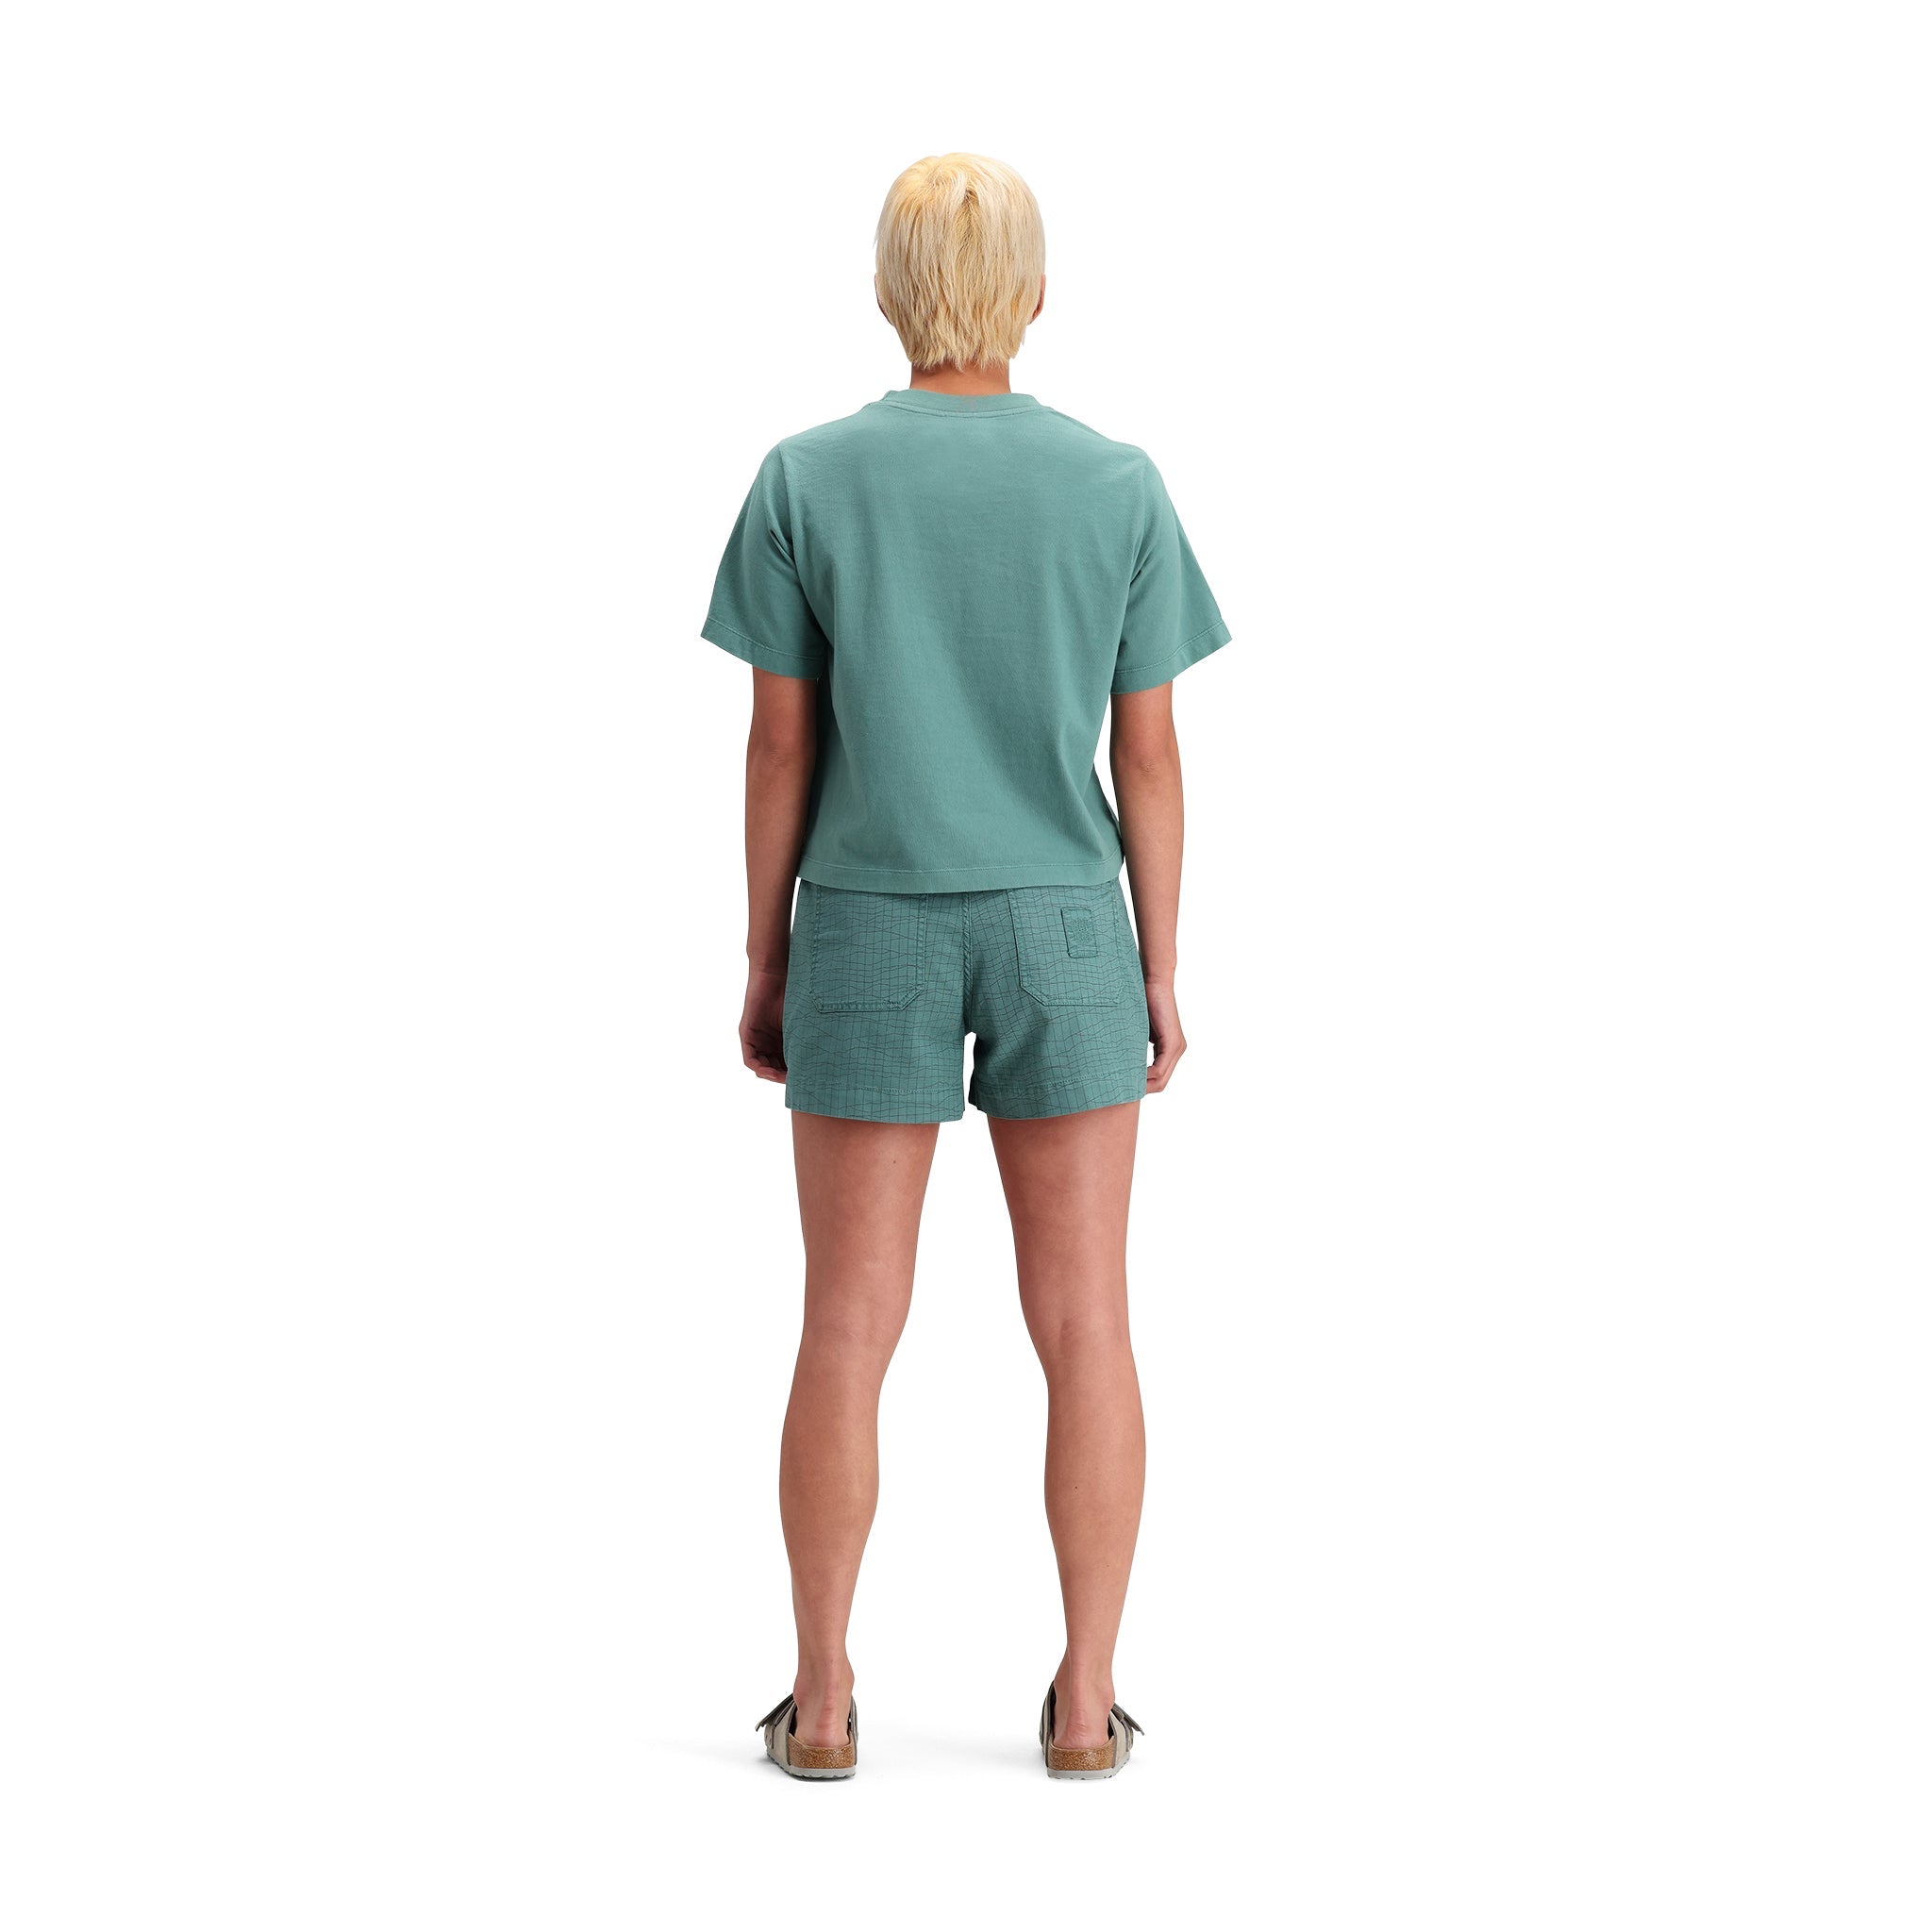 General back model shot of Topo Designs Dirt Tee - Women's in "Sea Pine"